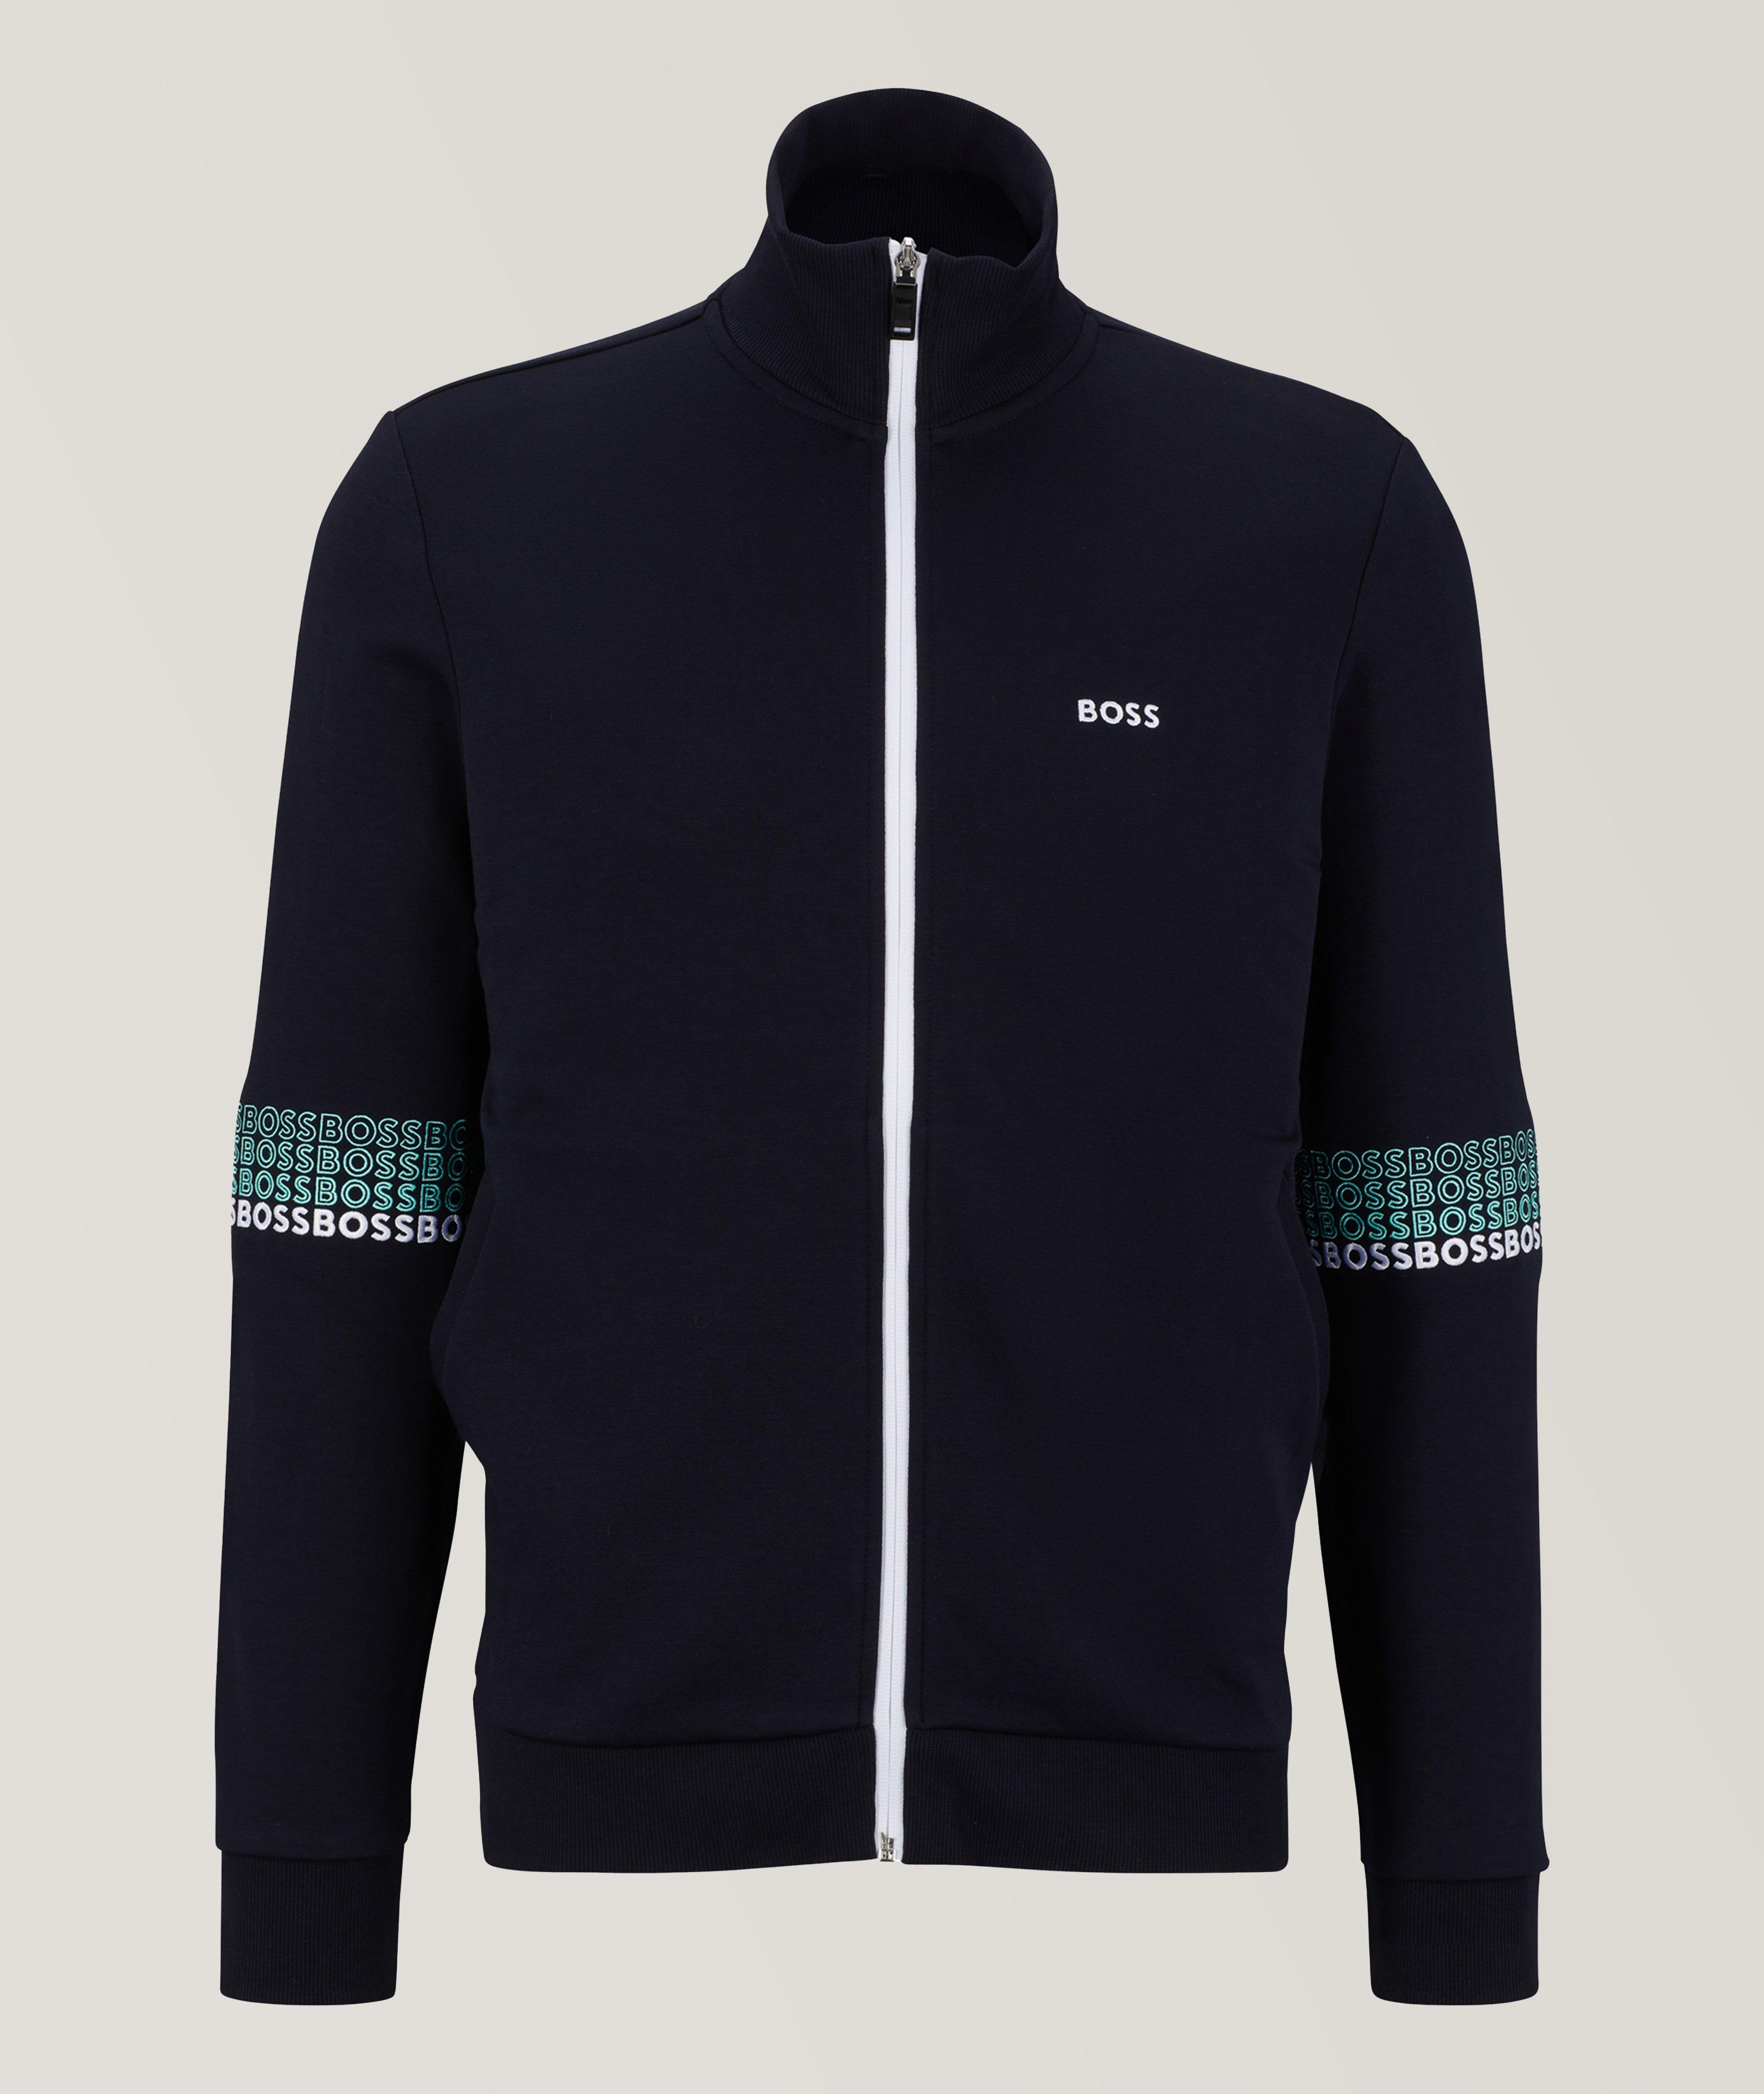 Full-Zip Multi-Coloured Logos Cotton-Blend Sweater image 0